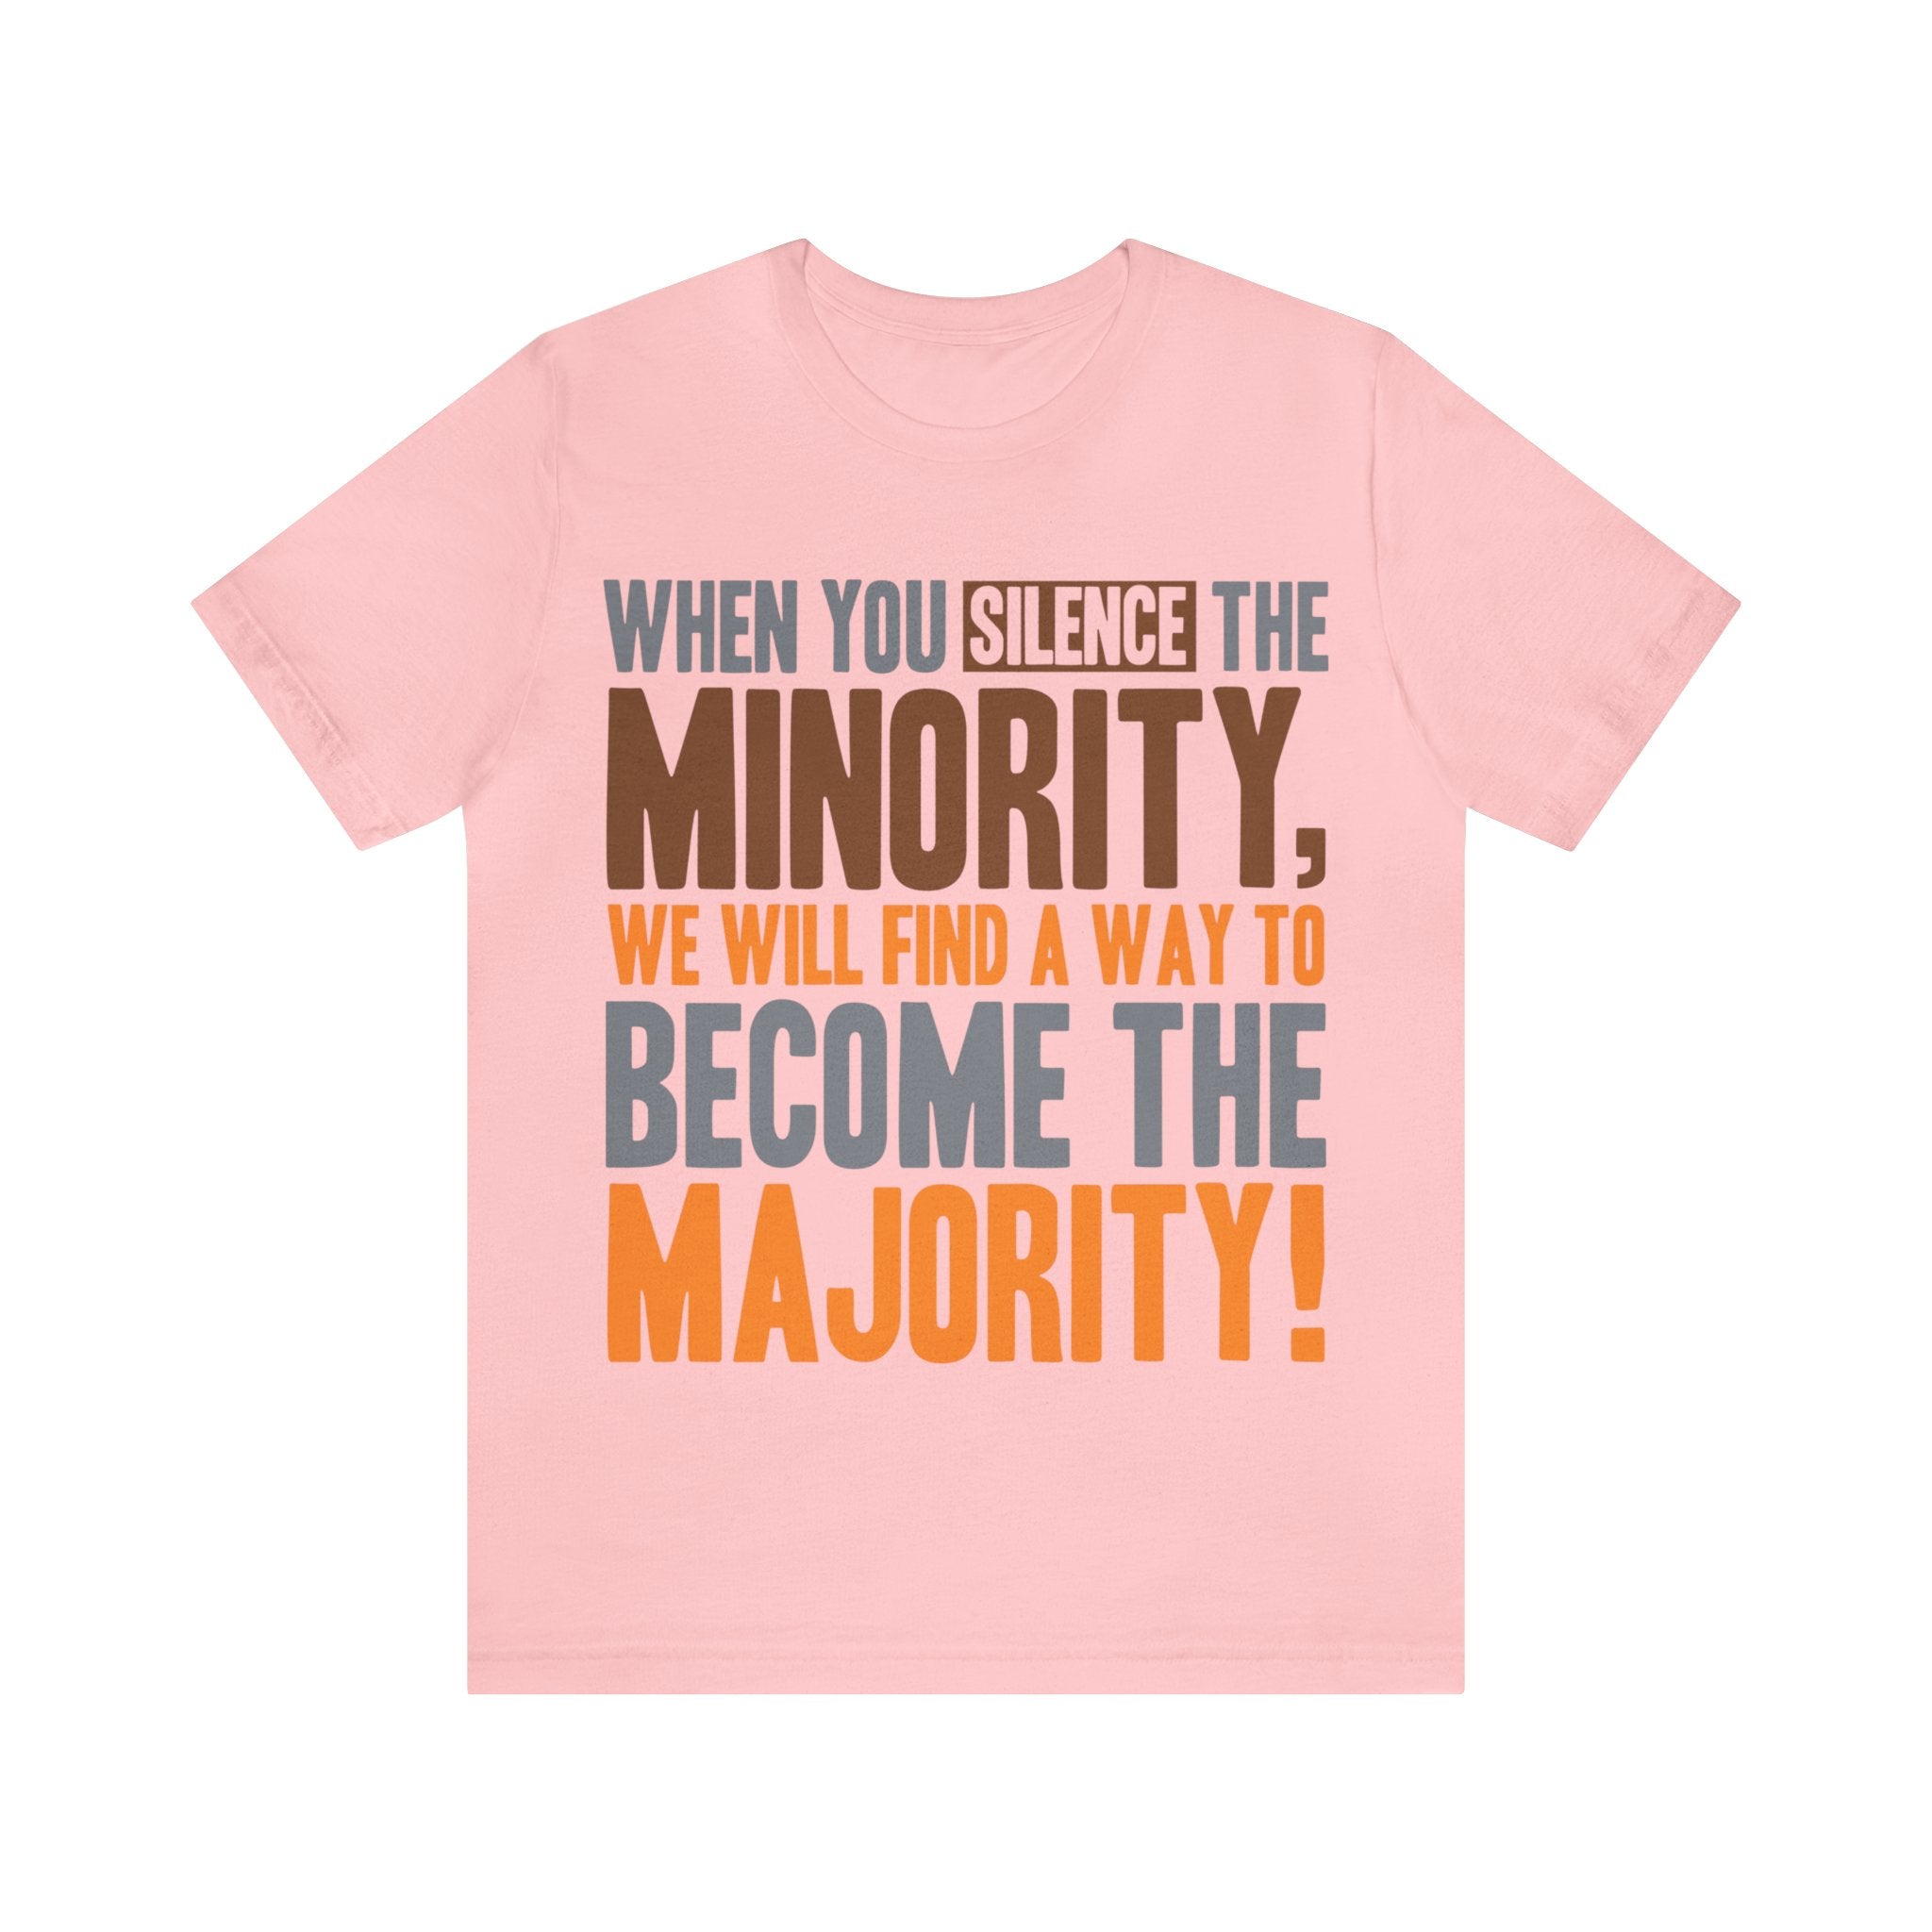 Silence the Minority - Become the Majority